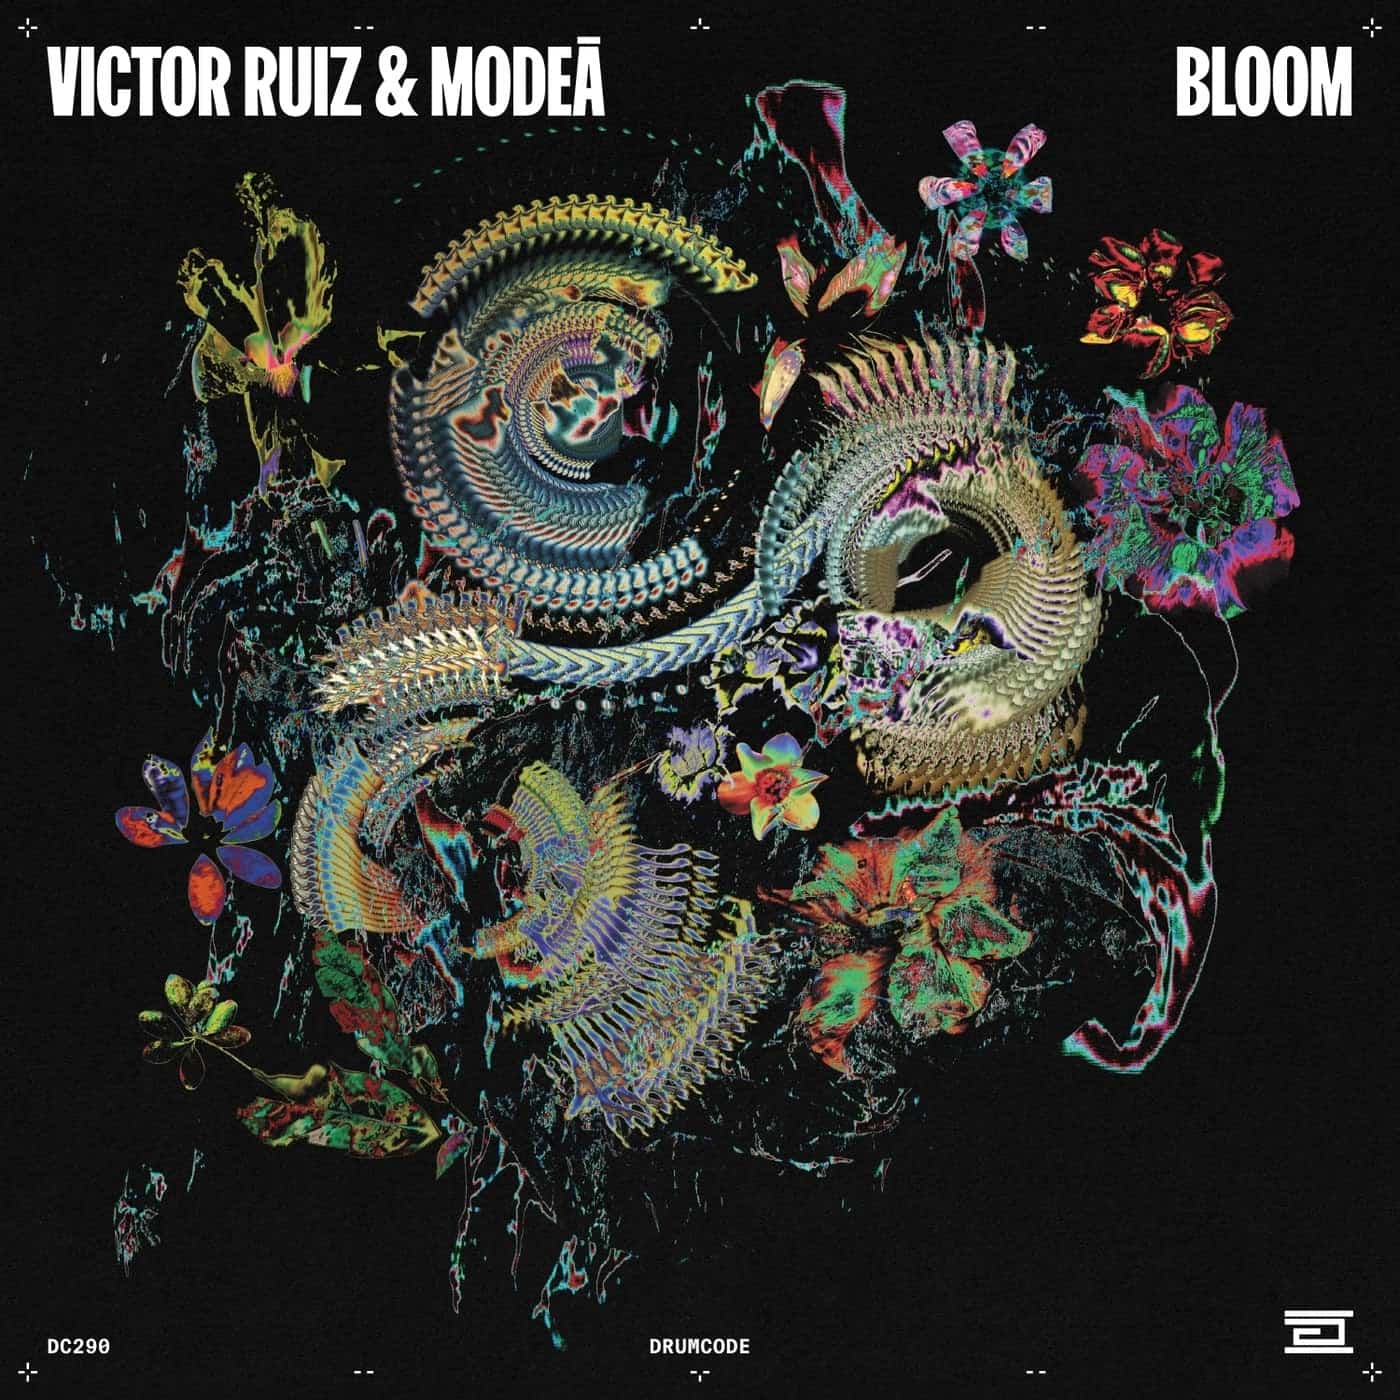 image cover: Bloom by Victor Ruiz, Modeā on Drumcode